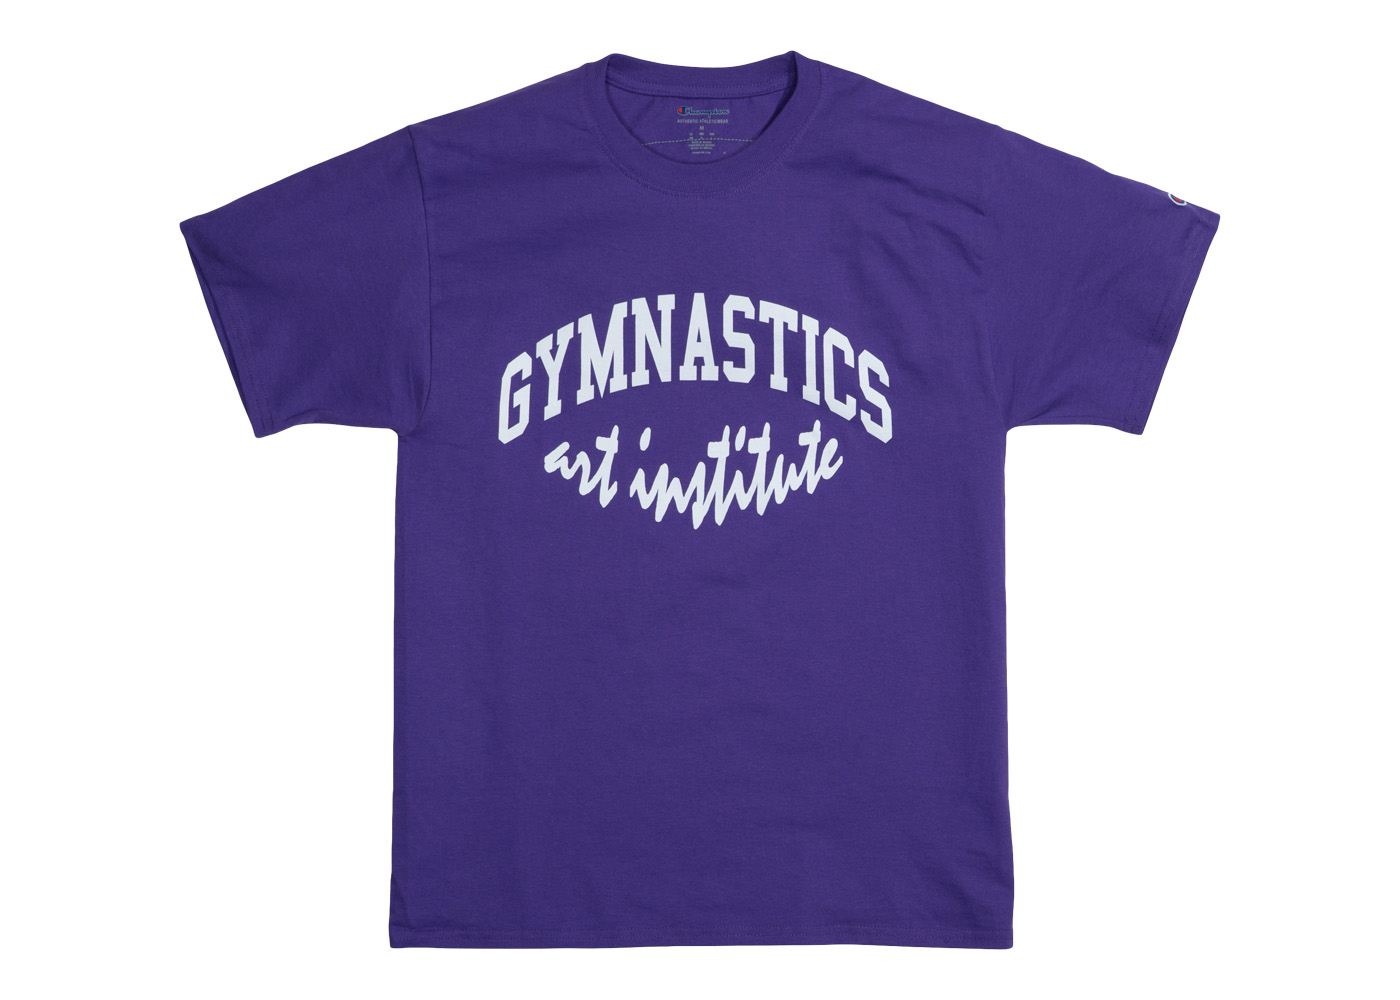 Virgil Abloh Brooklyn Museum Gymnastics Art Institute T-shirt